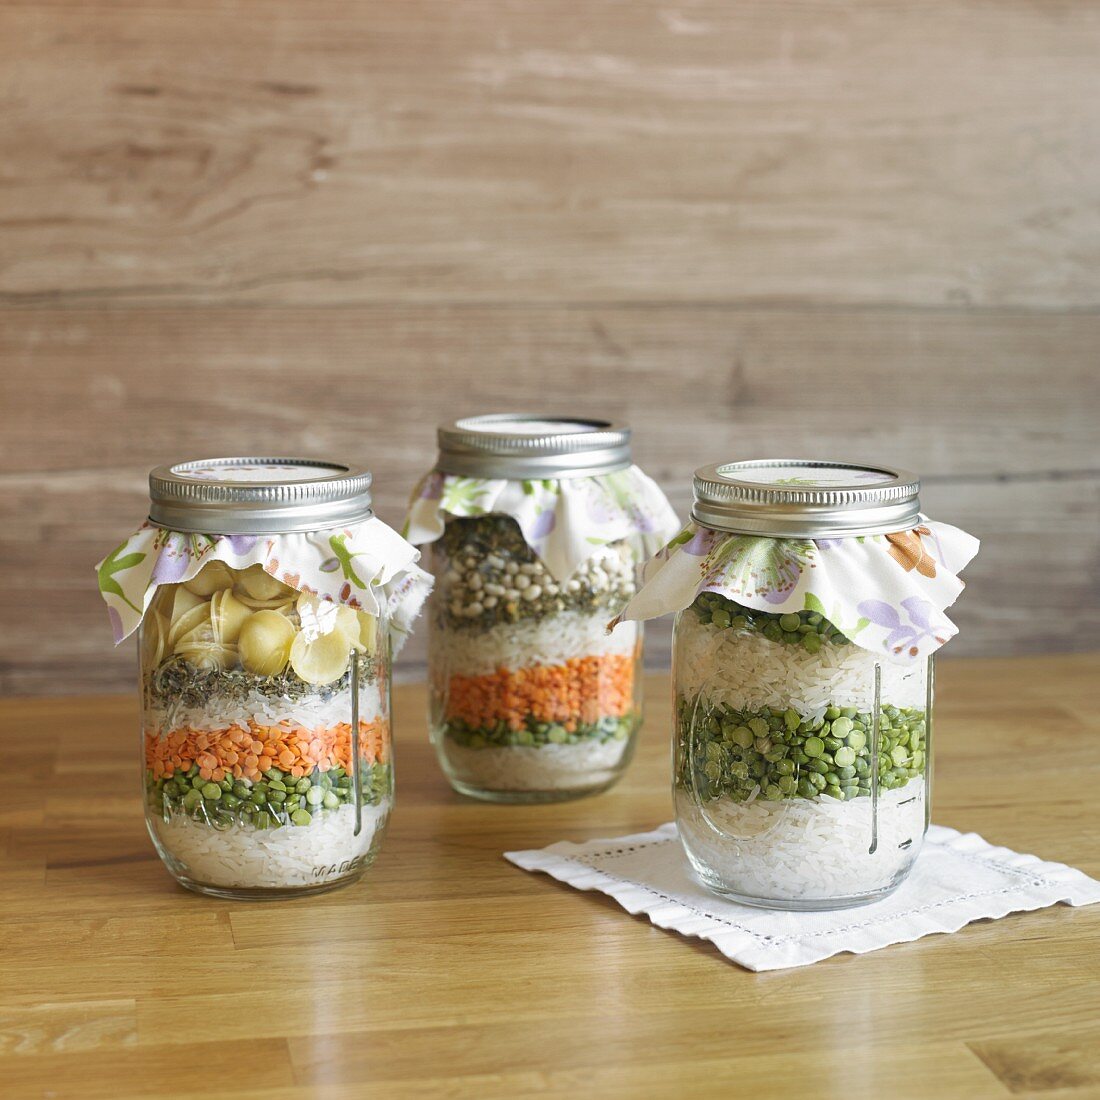 Assorted bean soup mixes in jars